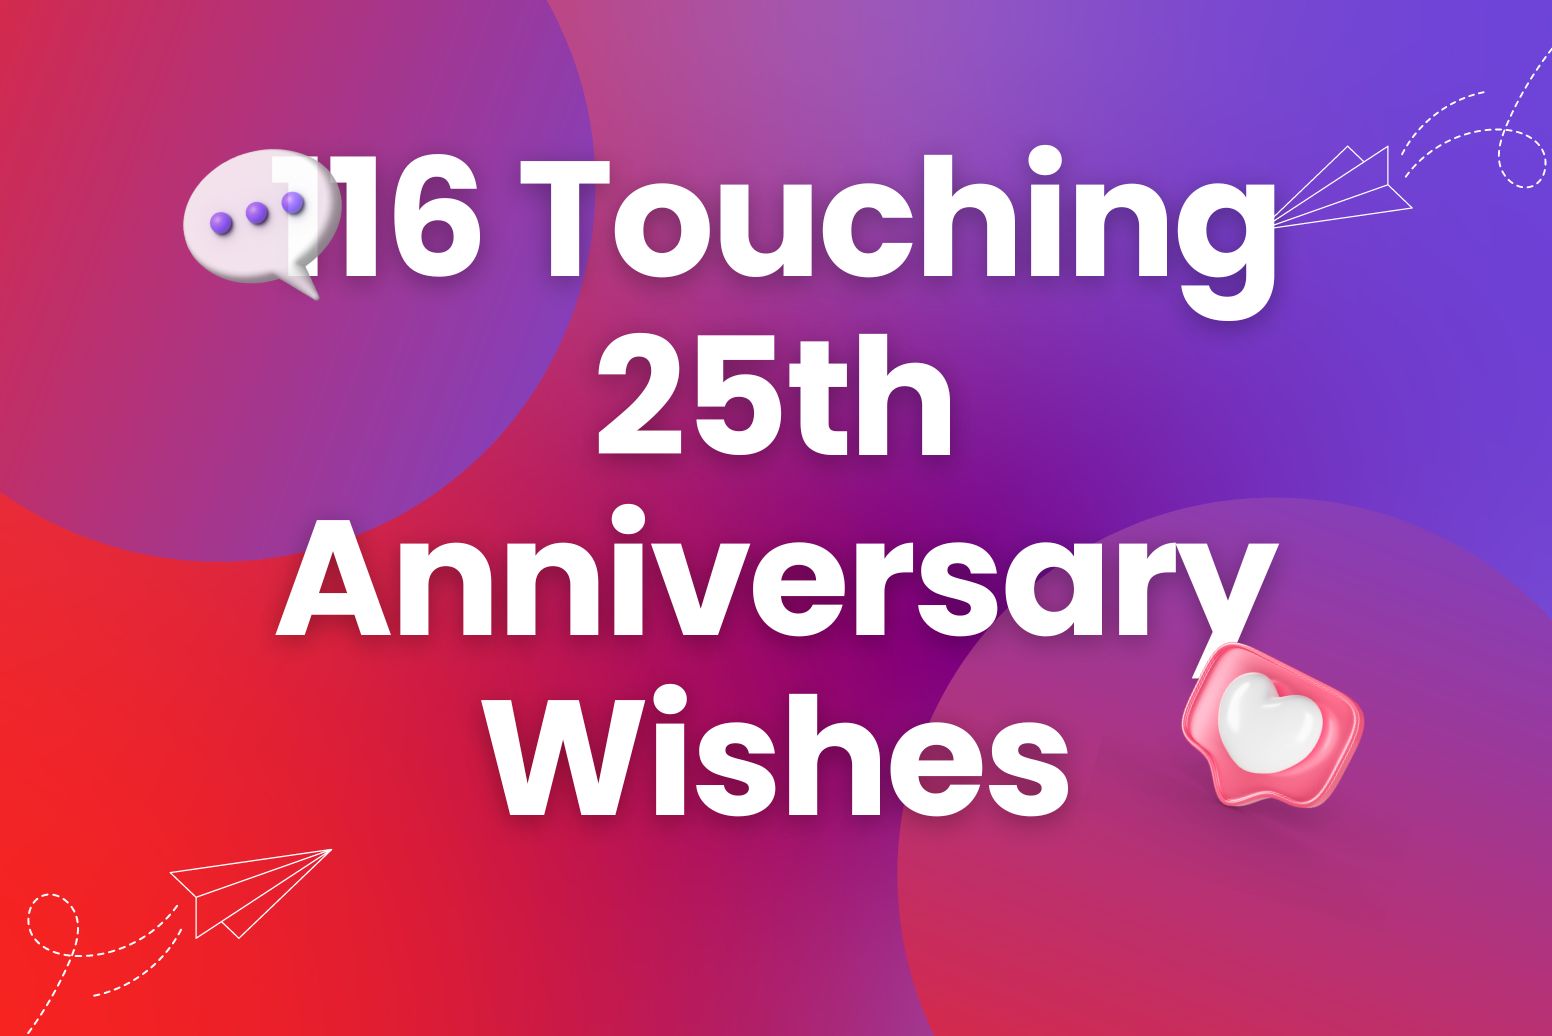 116 Touching 25th Anniversary Wishes